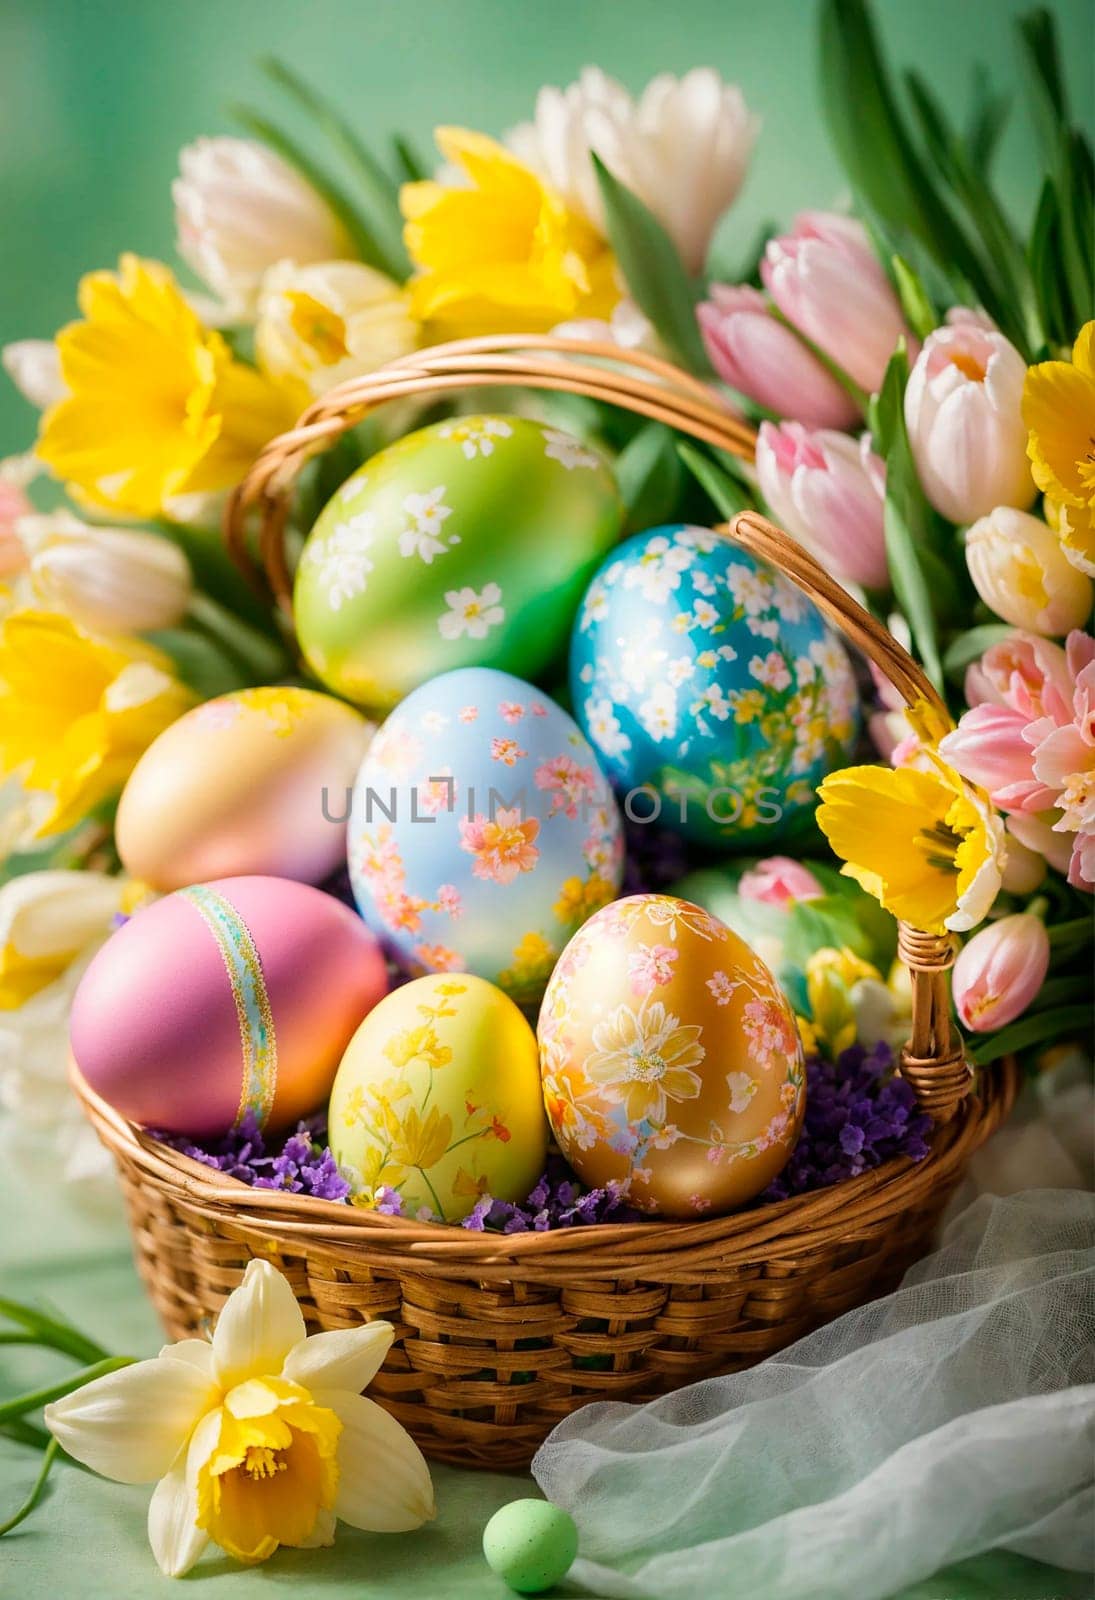 Lots of beautiful Easter eggs. Selective focus. by yanadjana